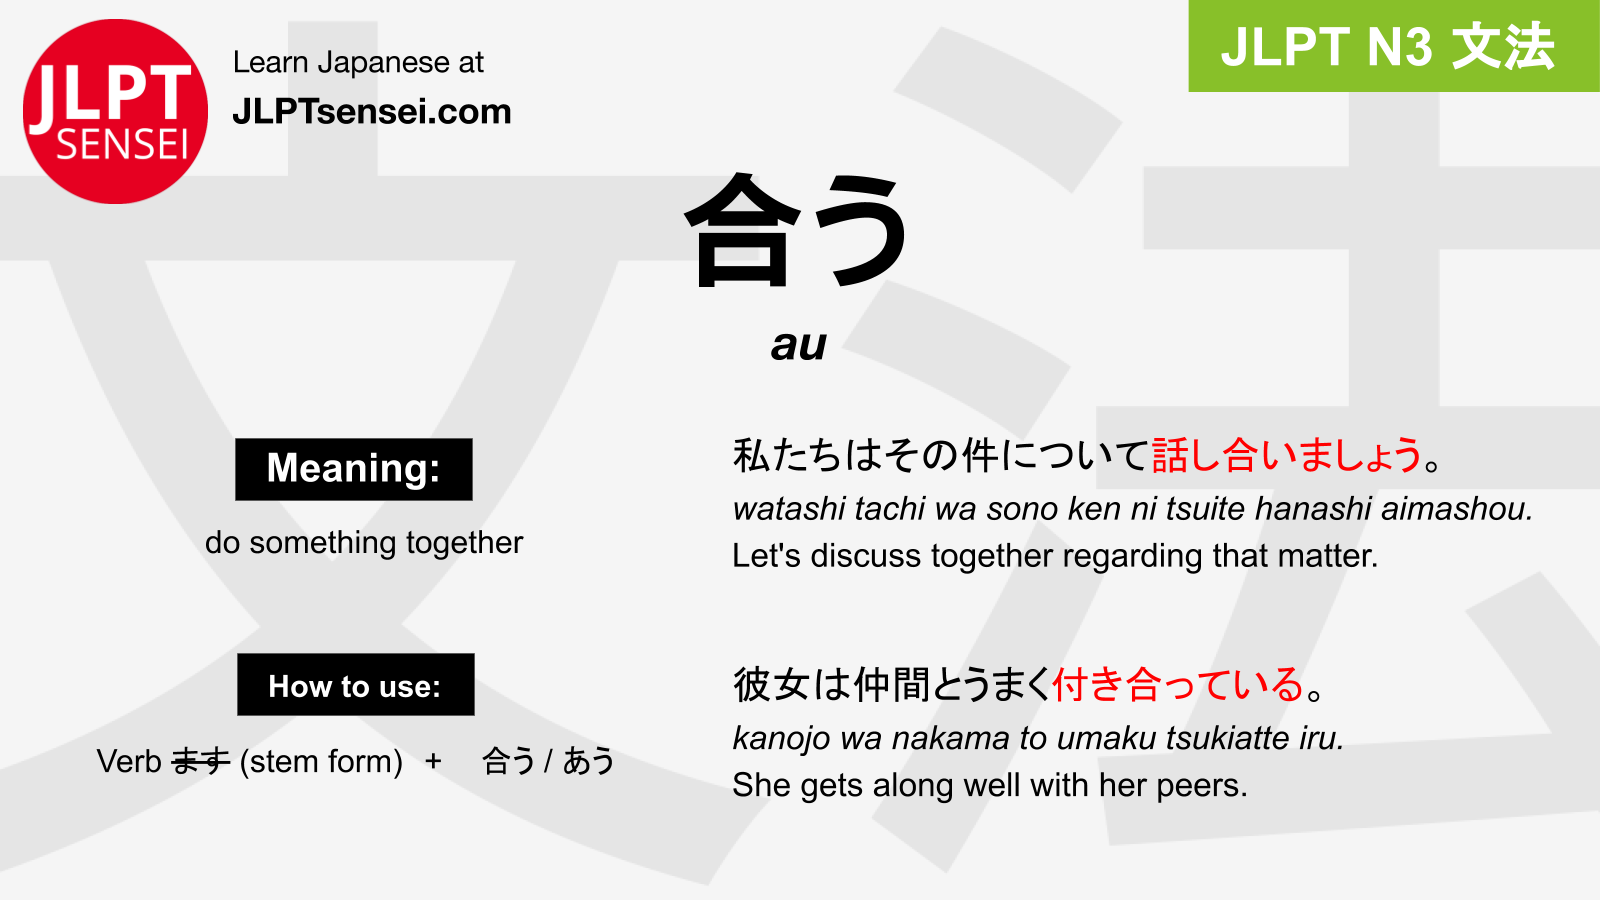 JLPT N3 Grammar: 合う (au) Meaning – JLPTsensei.com